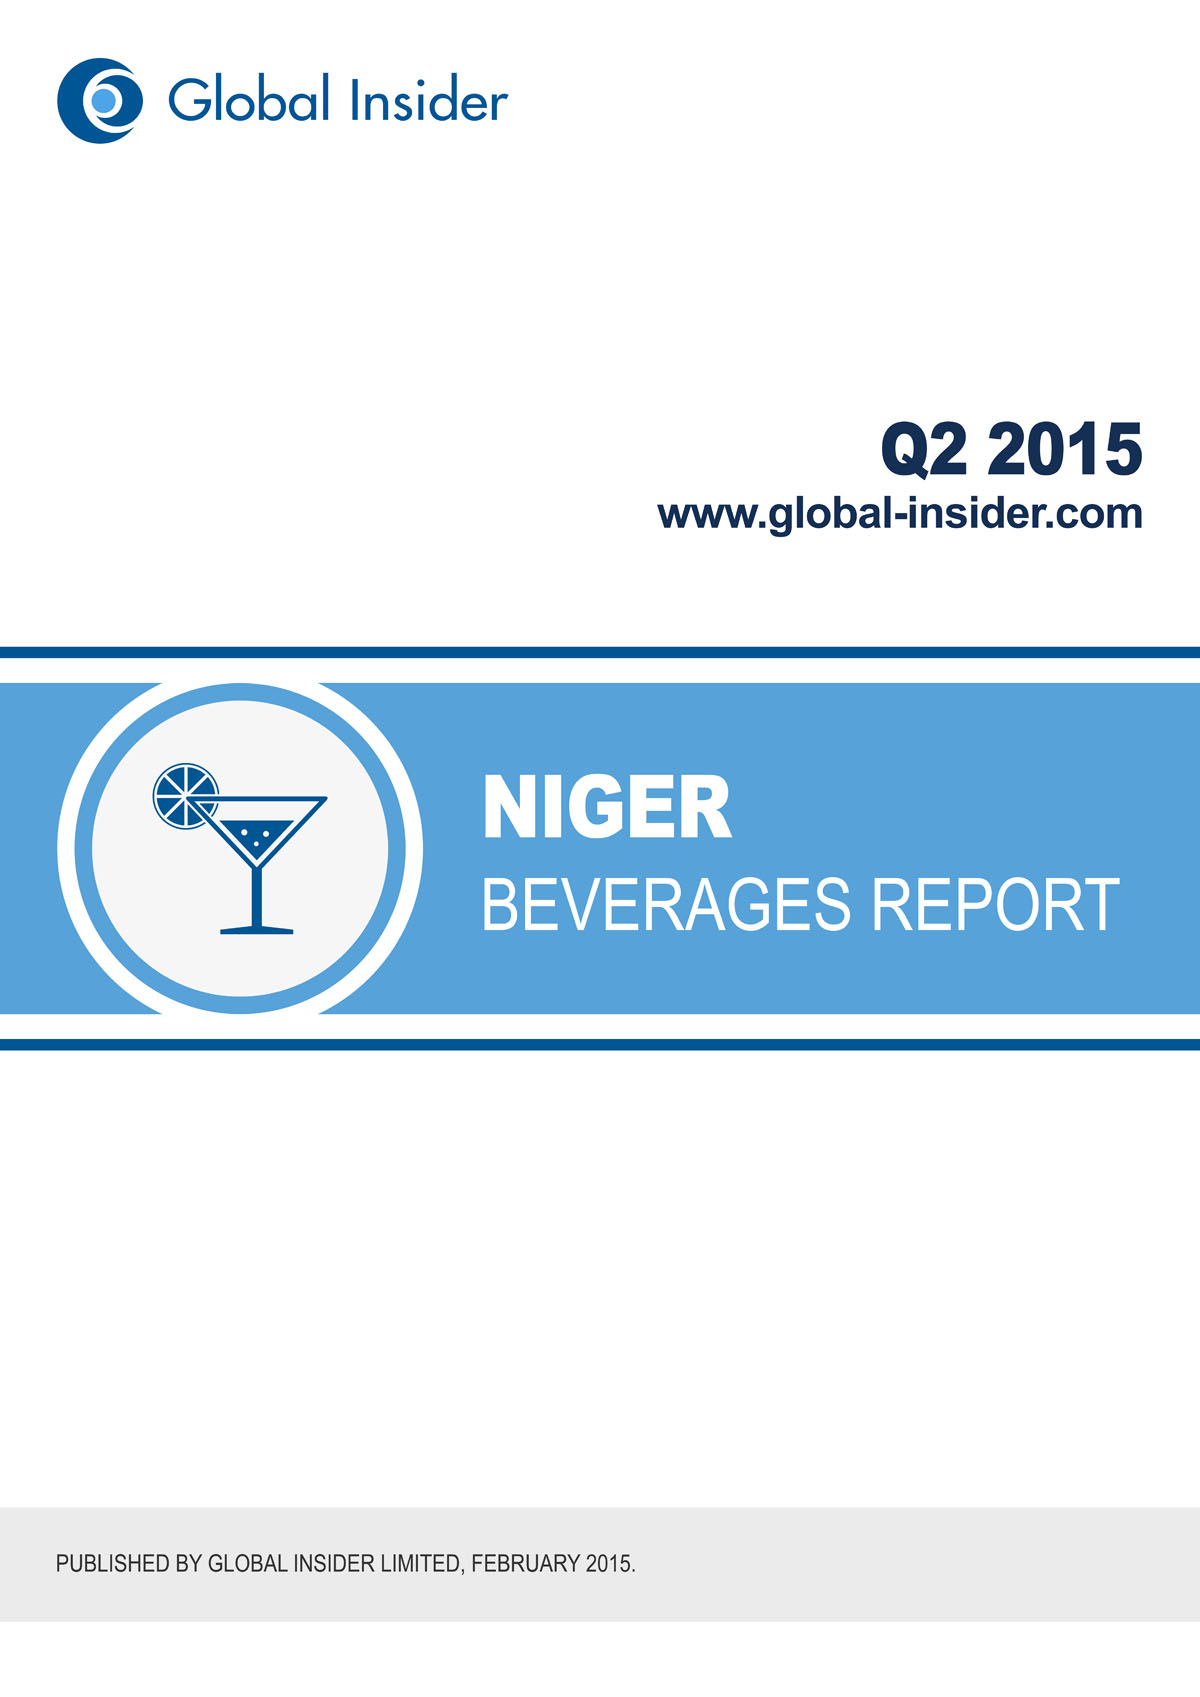 Niger Beverages Report